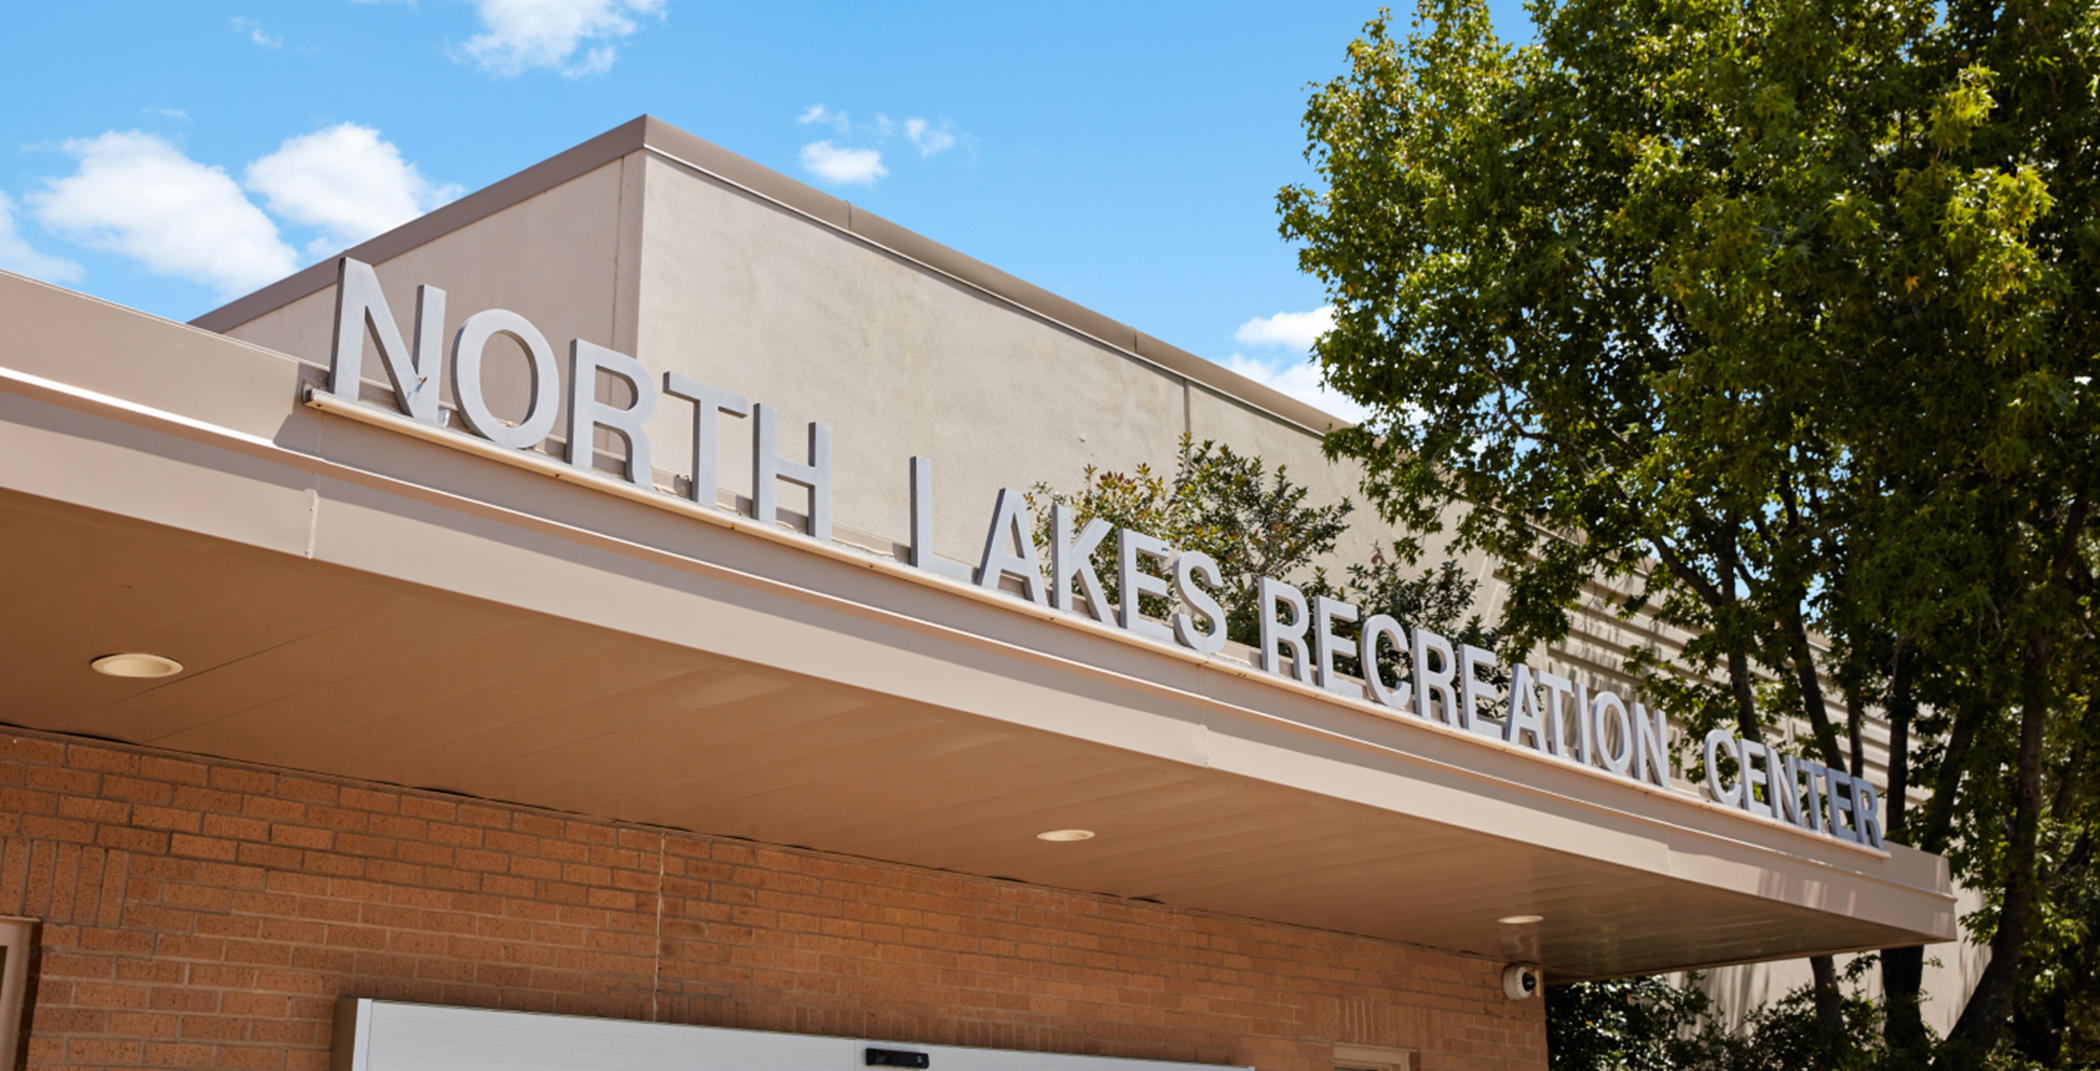 North Lakes Recreation Center in Denton, TX